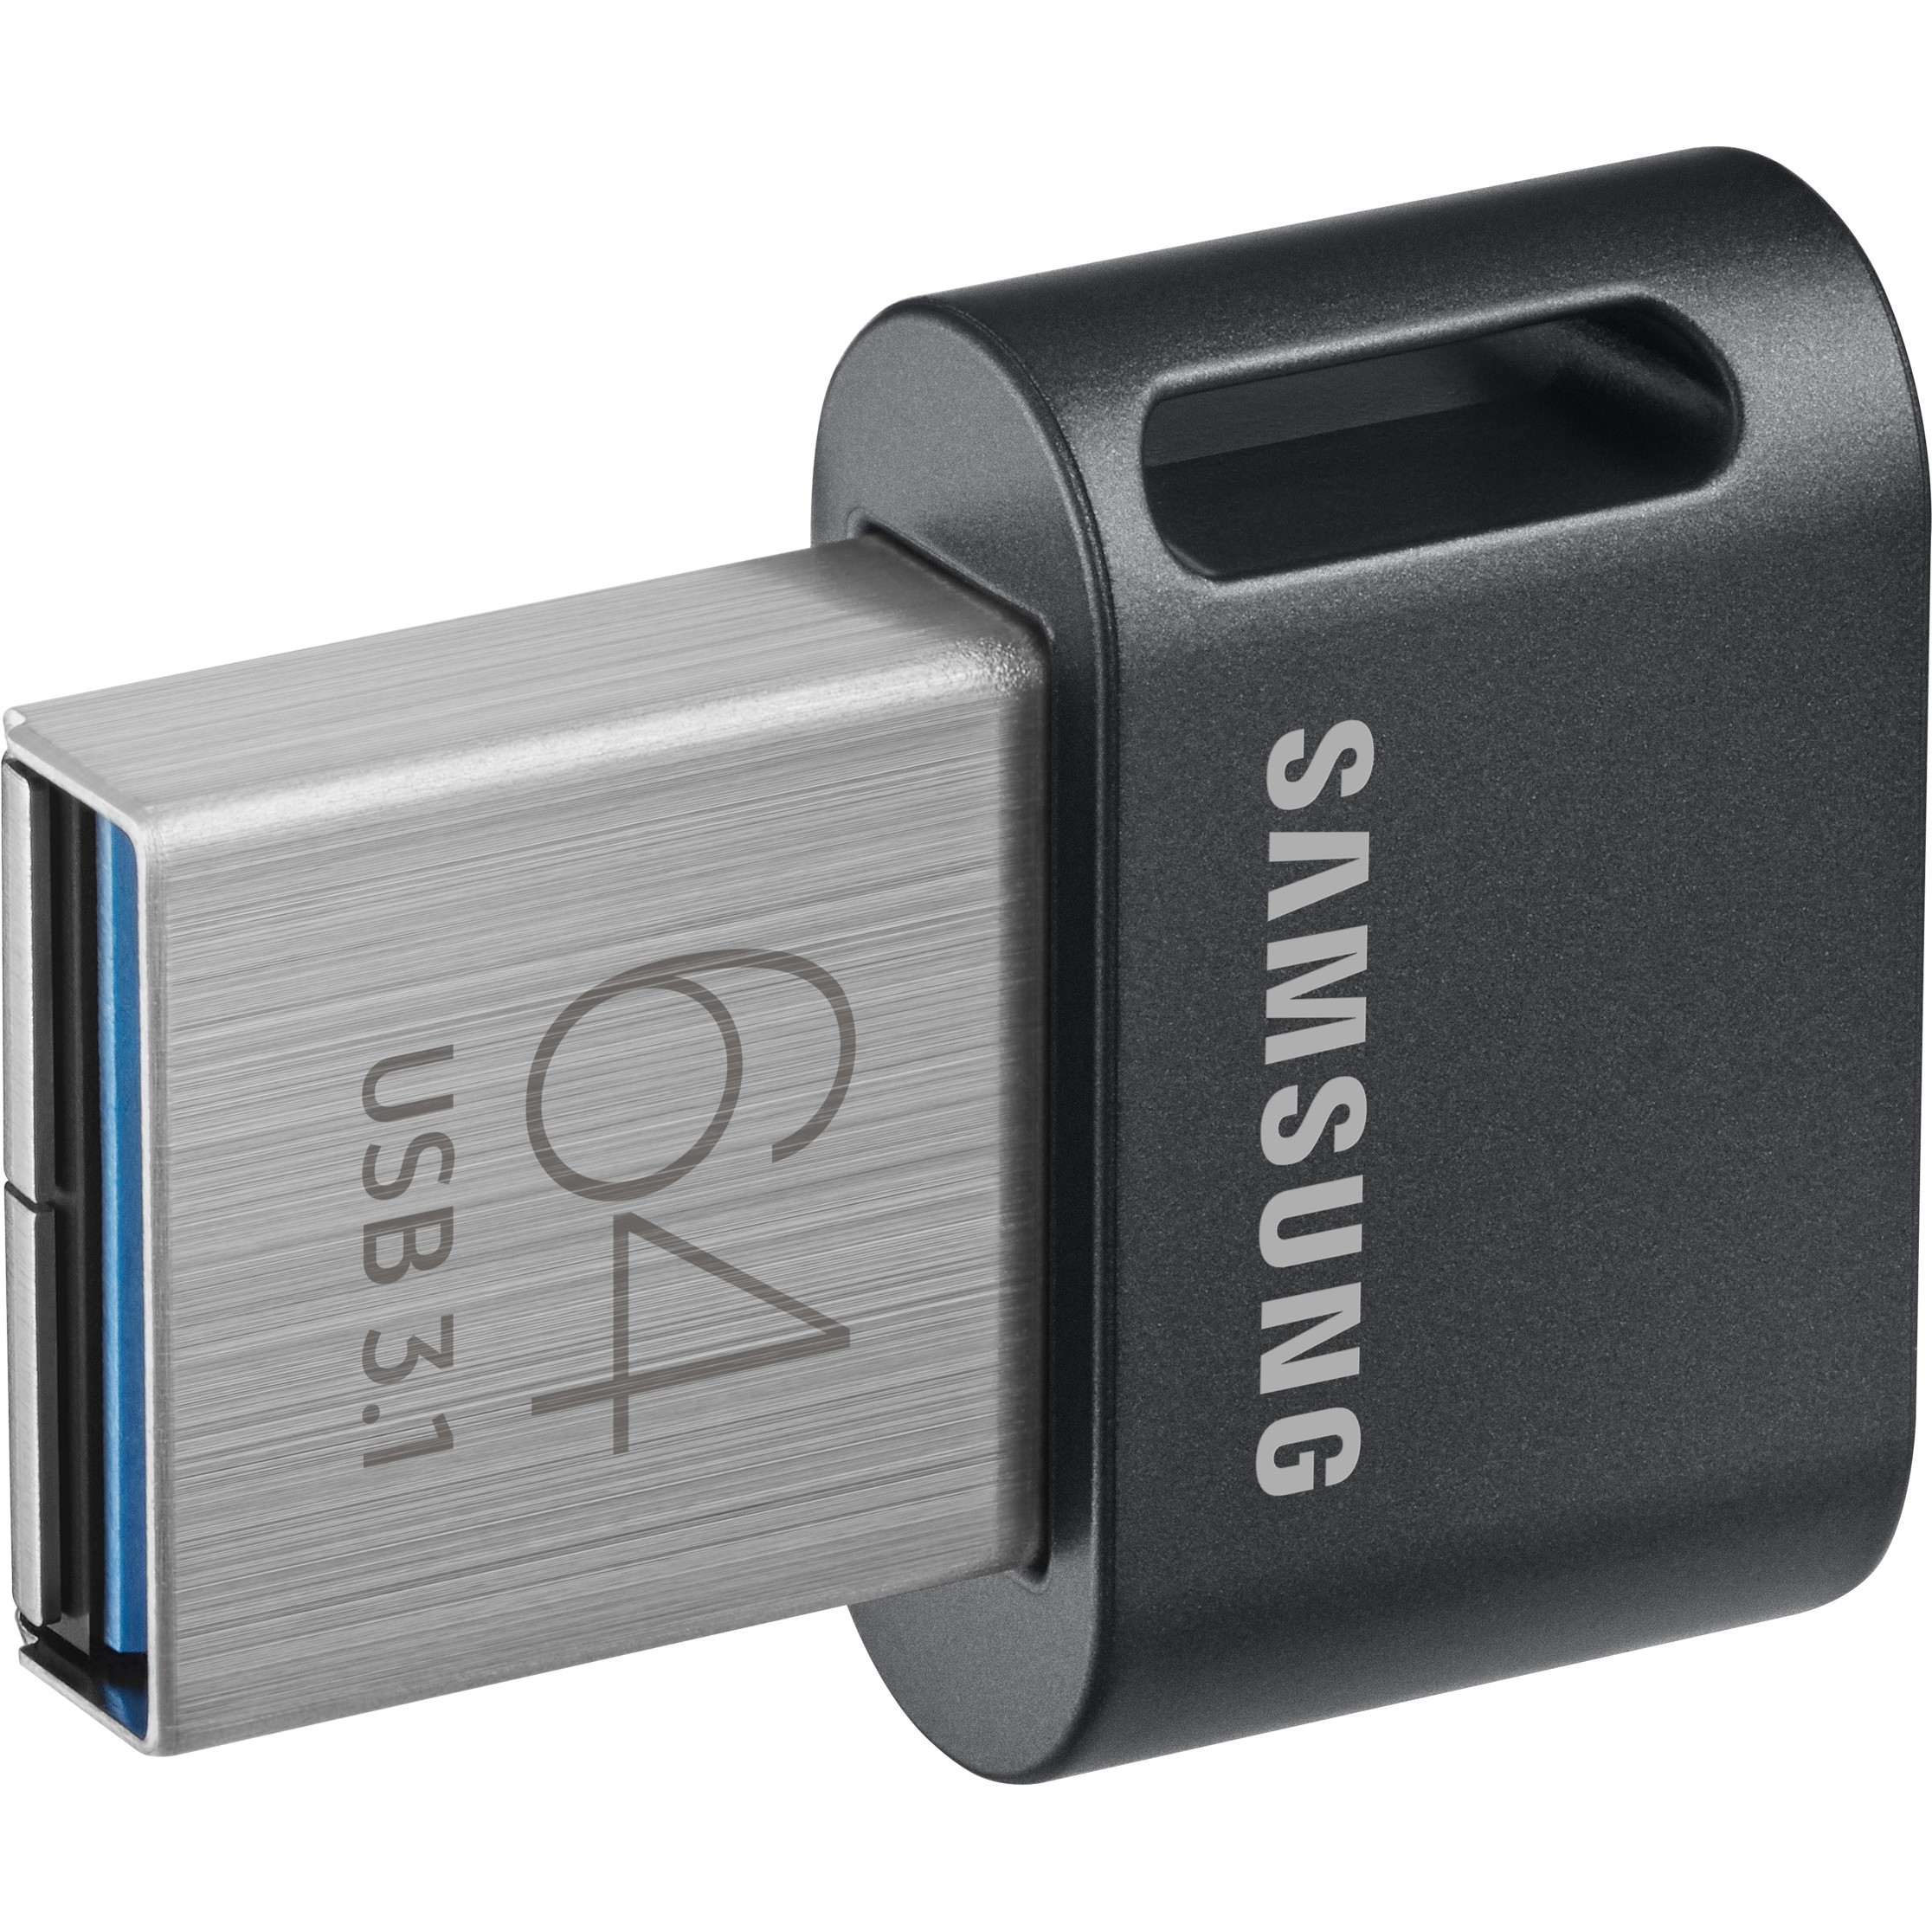 SAMSUNG MUF-64AB/APC, USB-Stick, Samsung MUF-64AB USB  (BILD5)